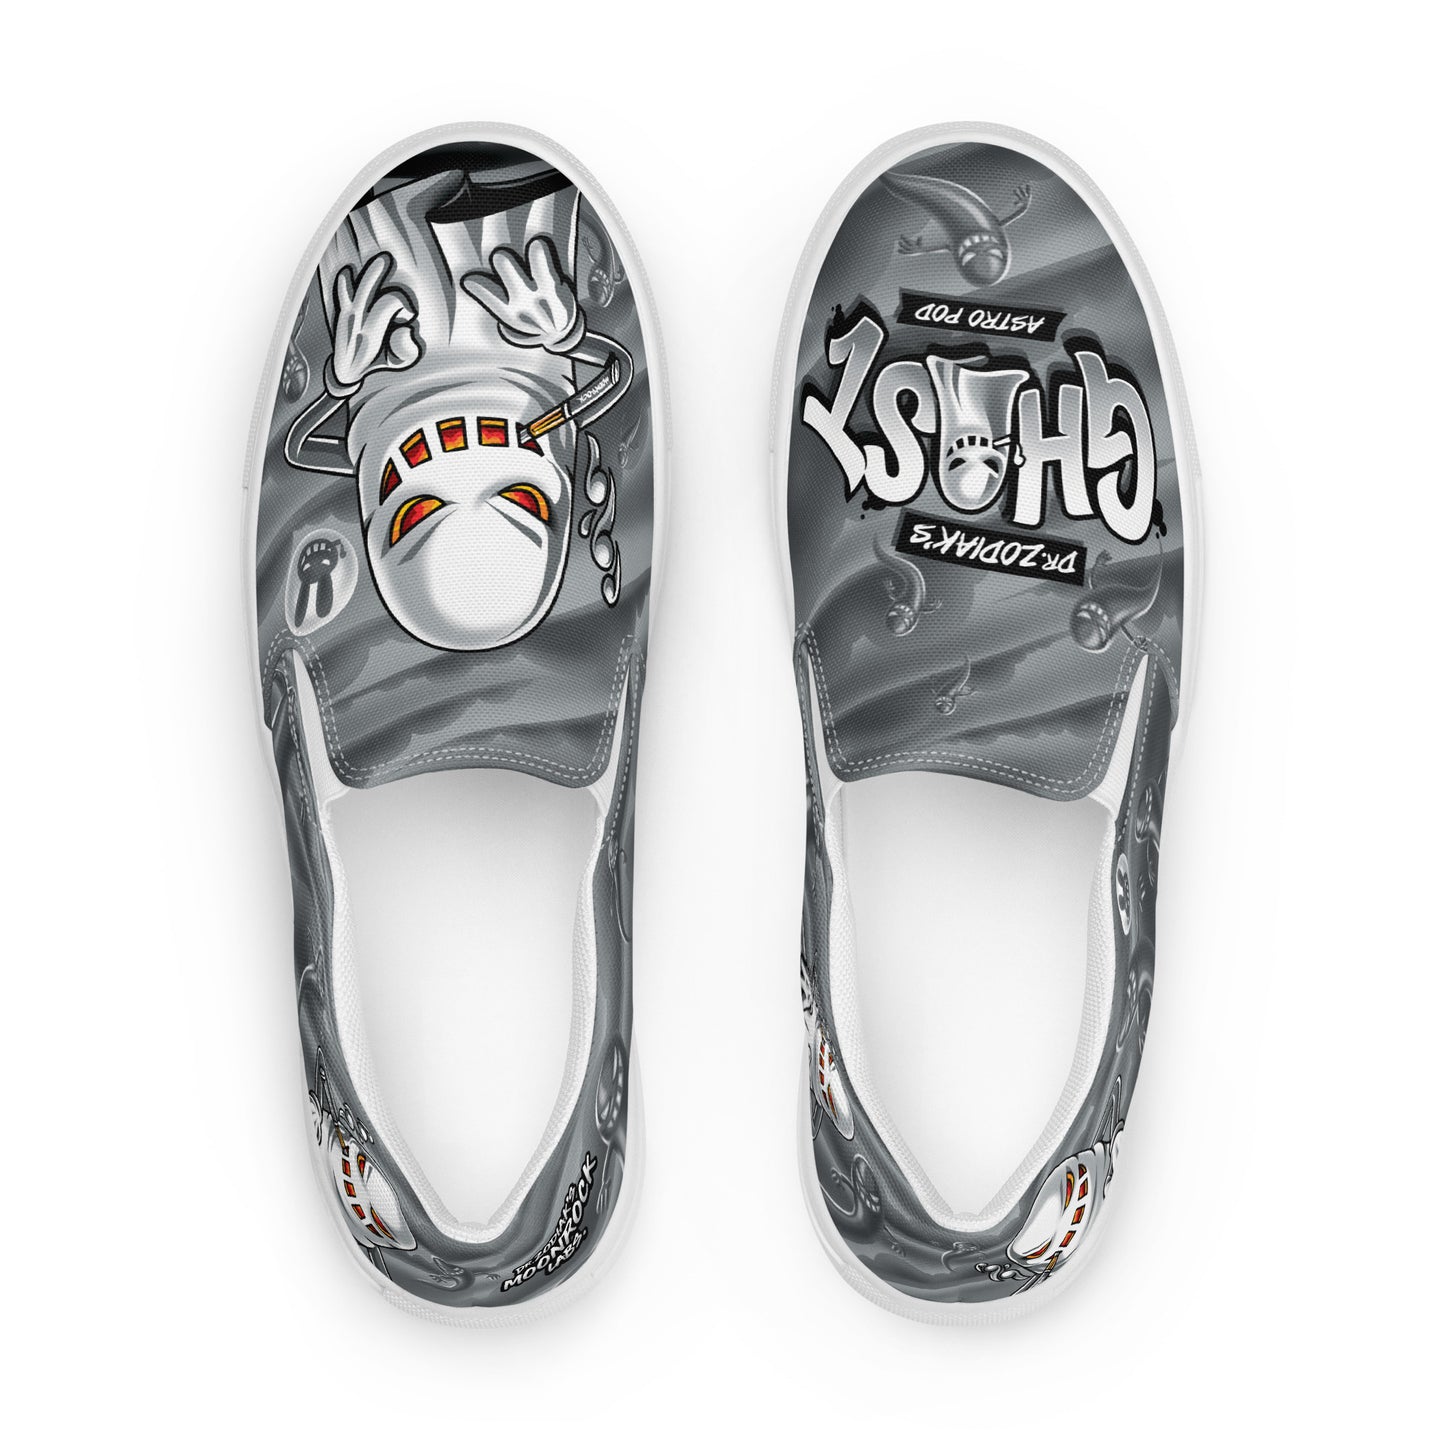 Dr. Zodiak's Moonrock Ghost Men’s slip-on canvas shoes